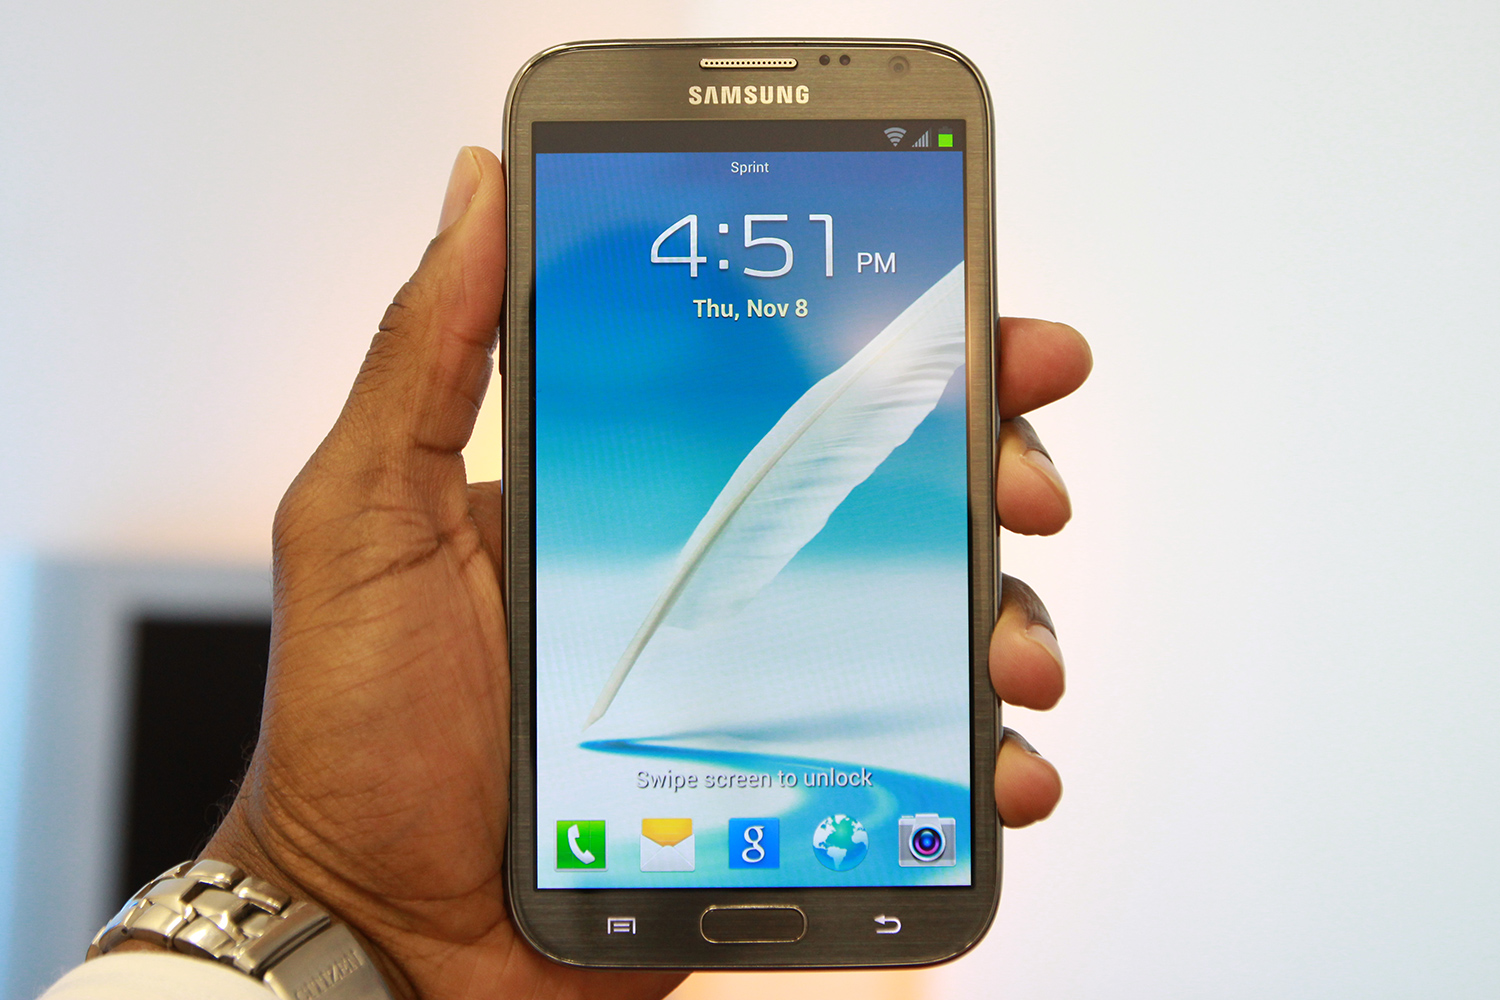 Samsung Galaxy Note 2 HD Wallpapers | HDWallpapers360.com - High ...